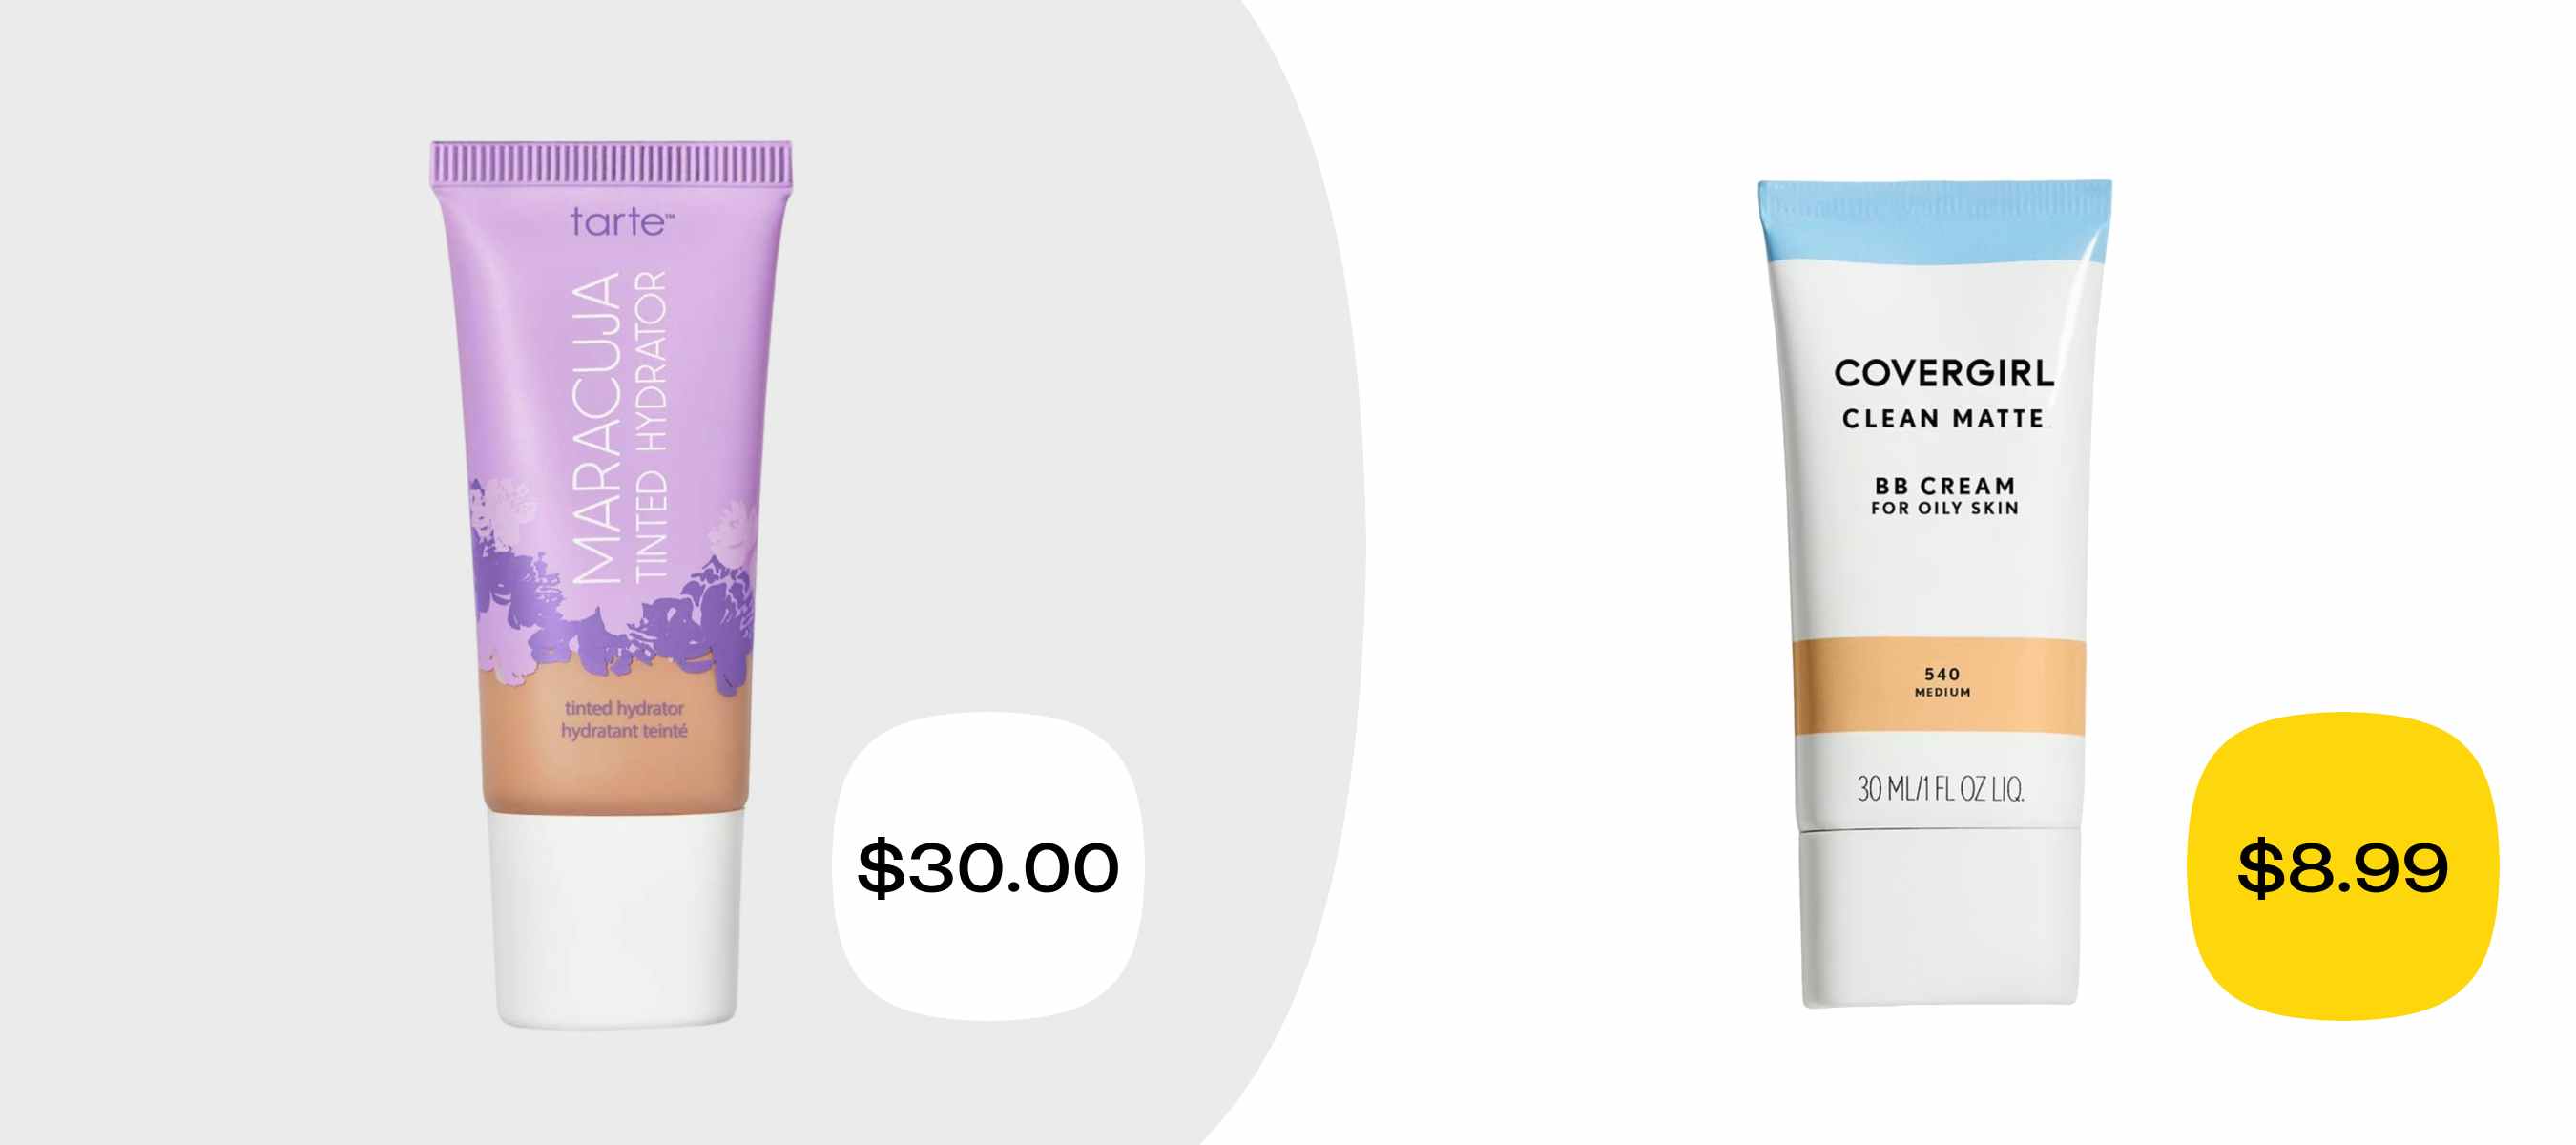 tarte maracuja tinted moisturizer and covergirl clean matte bb cream price comparison